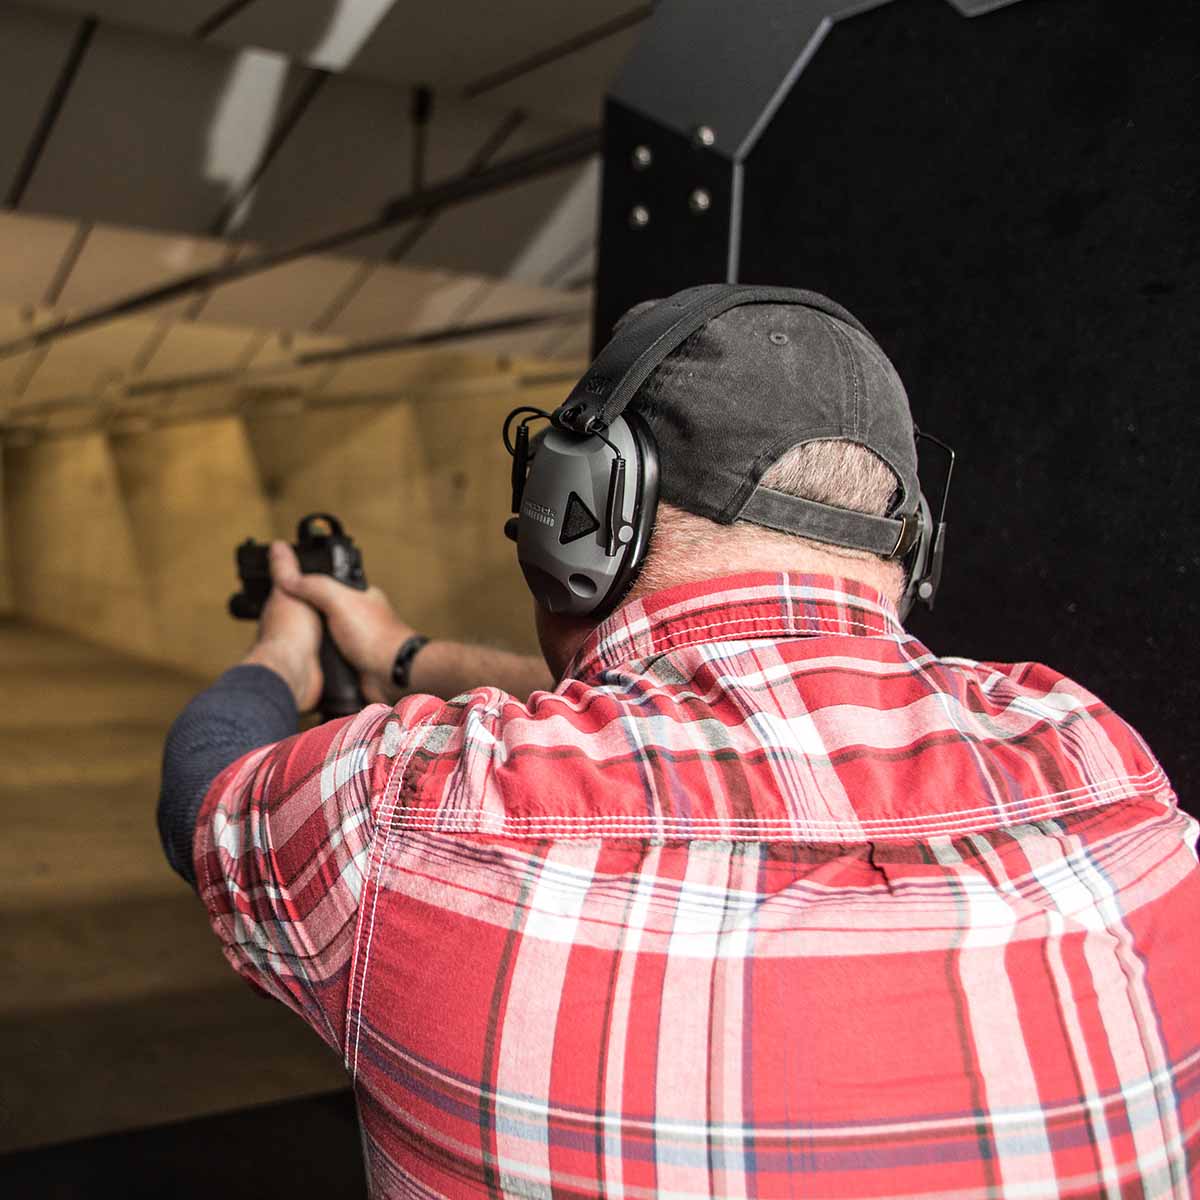 Man uses shooting range at FMJ armory in LaGrange, Georgia.